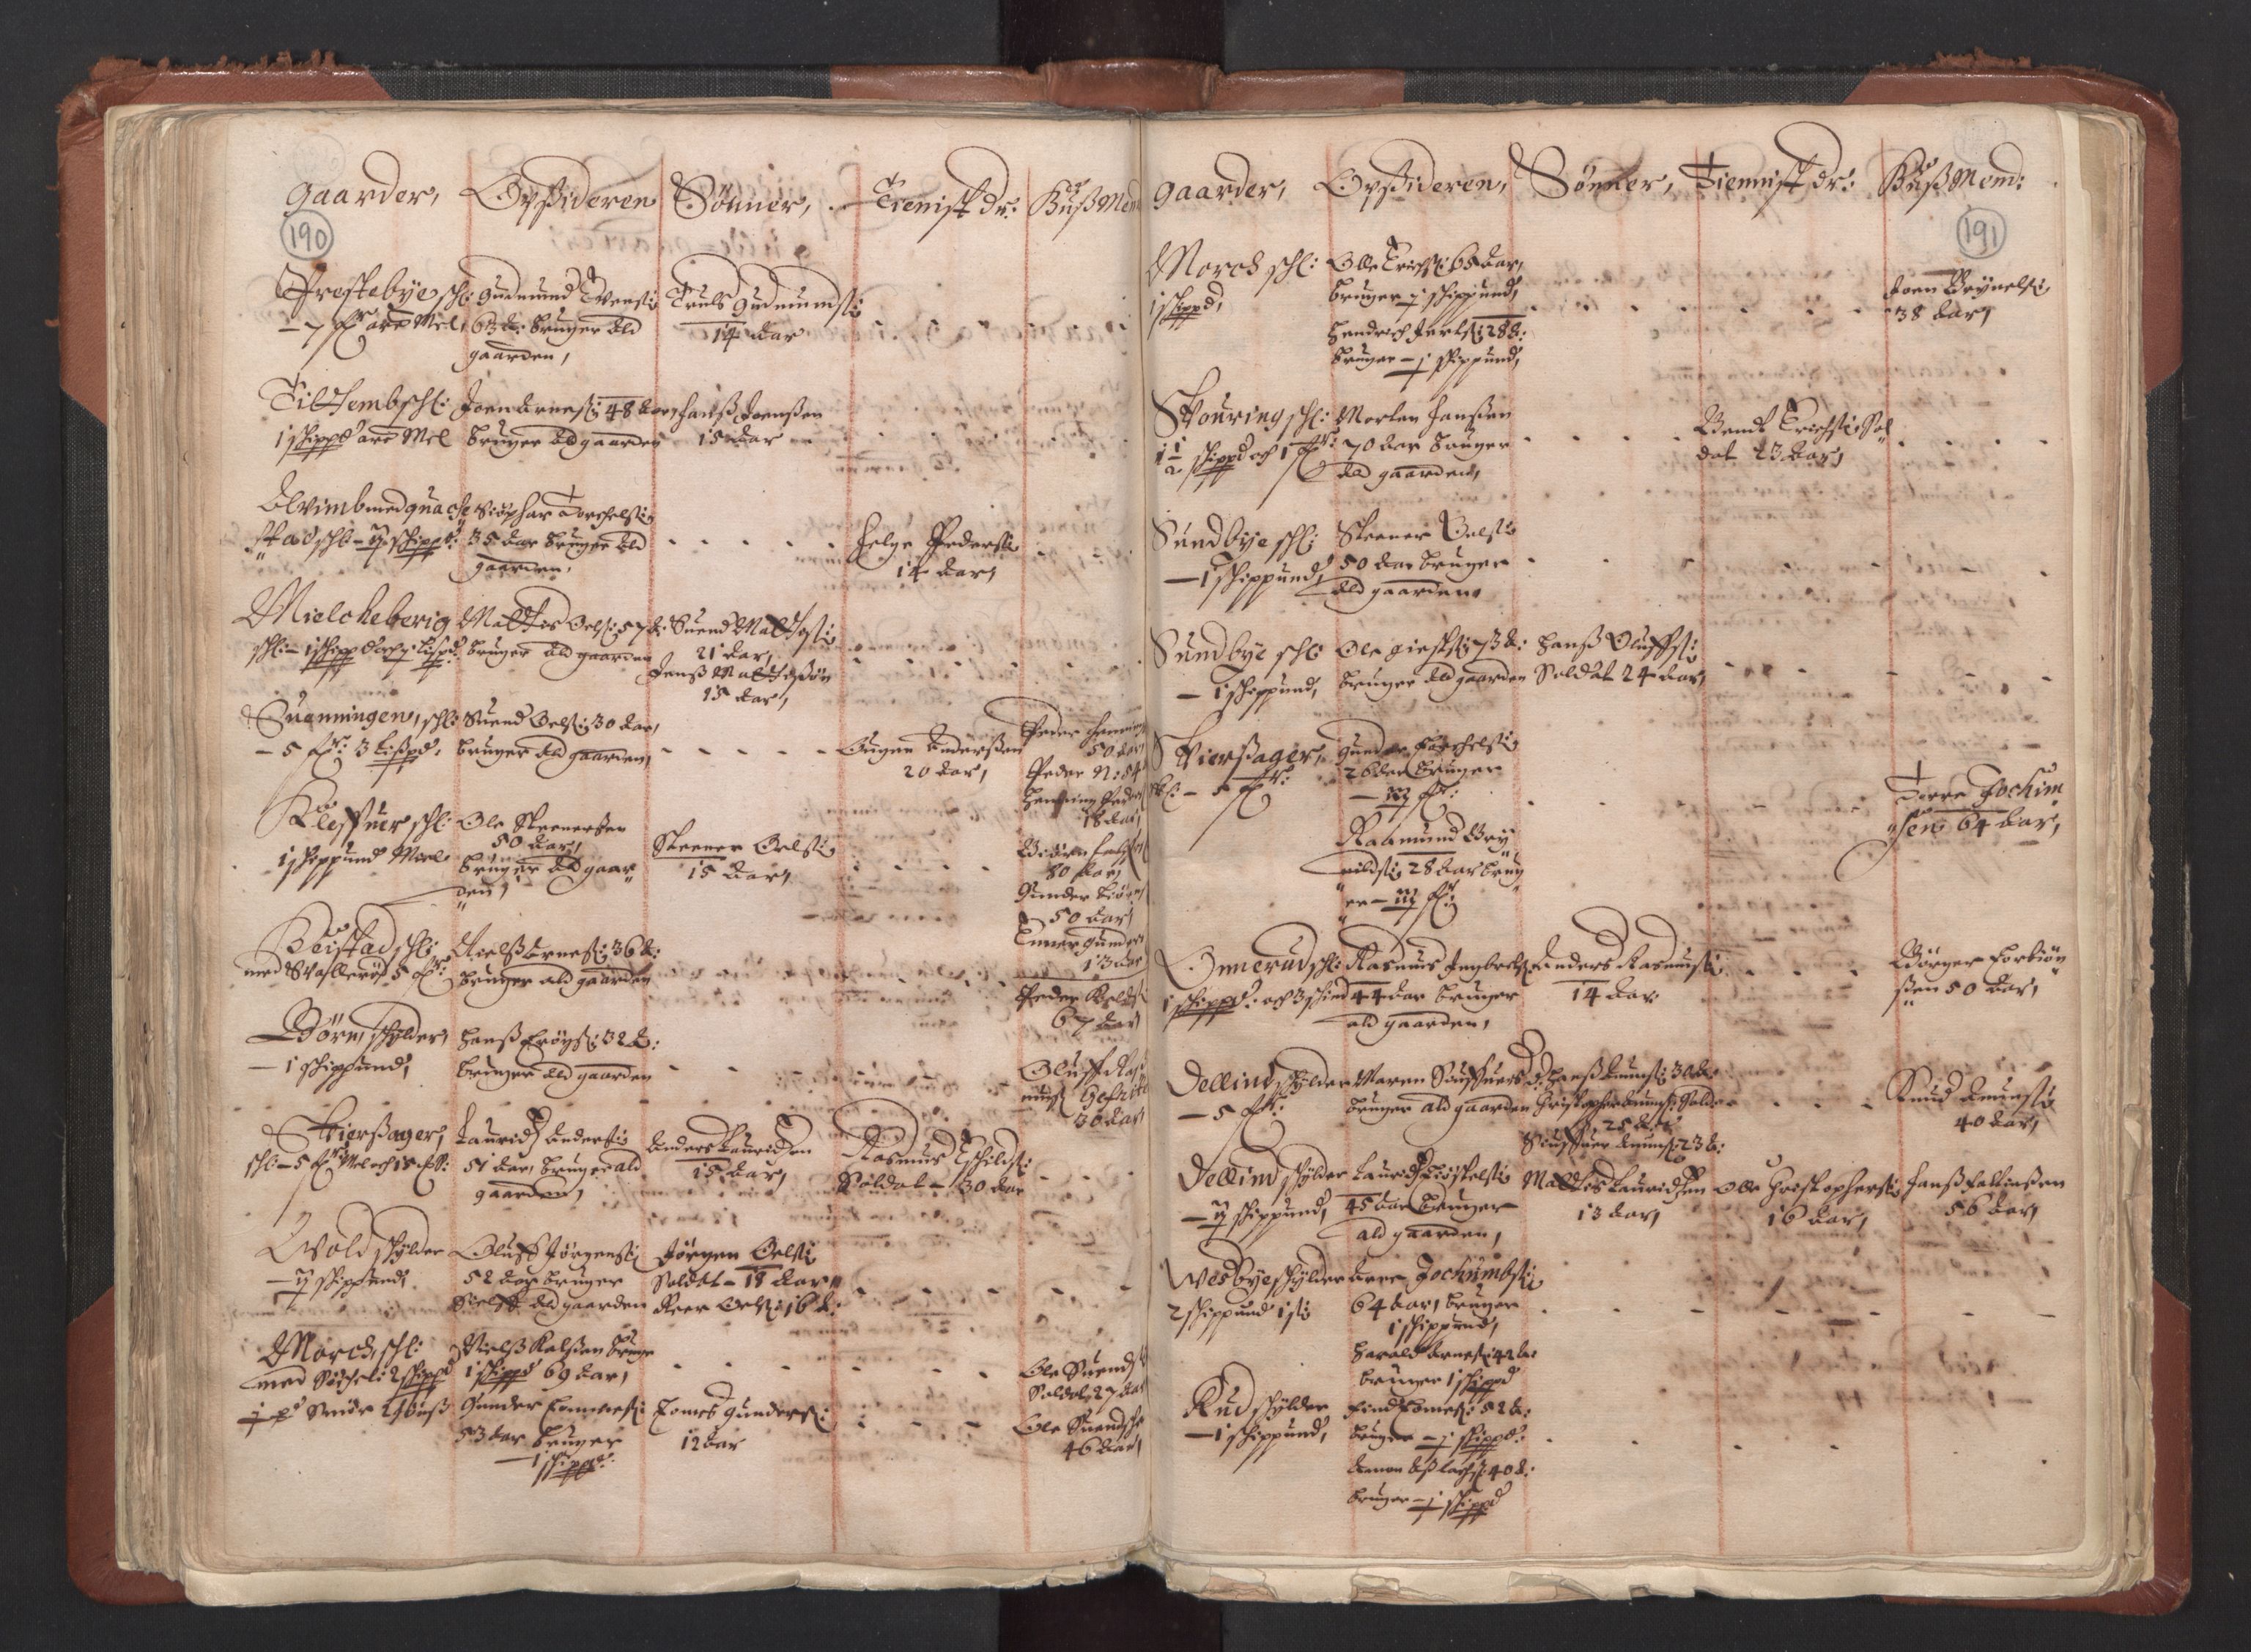 RA, Fogdenes og sorenskrivernes manntall 1664-1666, nr. 1: Fogderier (len og skipreider) i nåværende Østfold fylke, 1664, s. 190-191